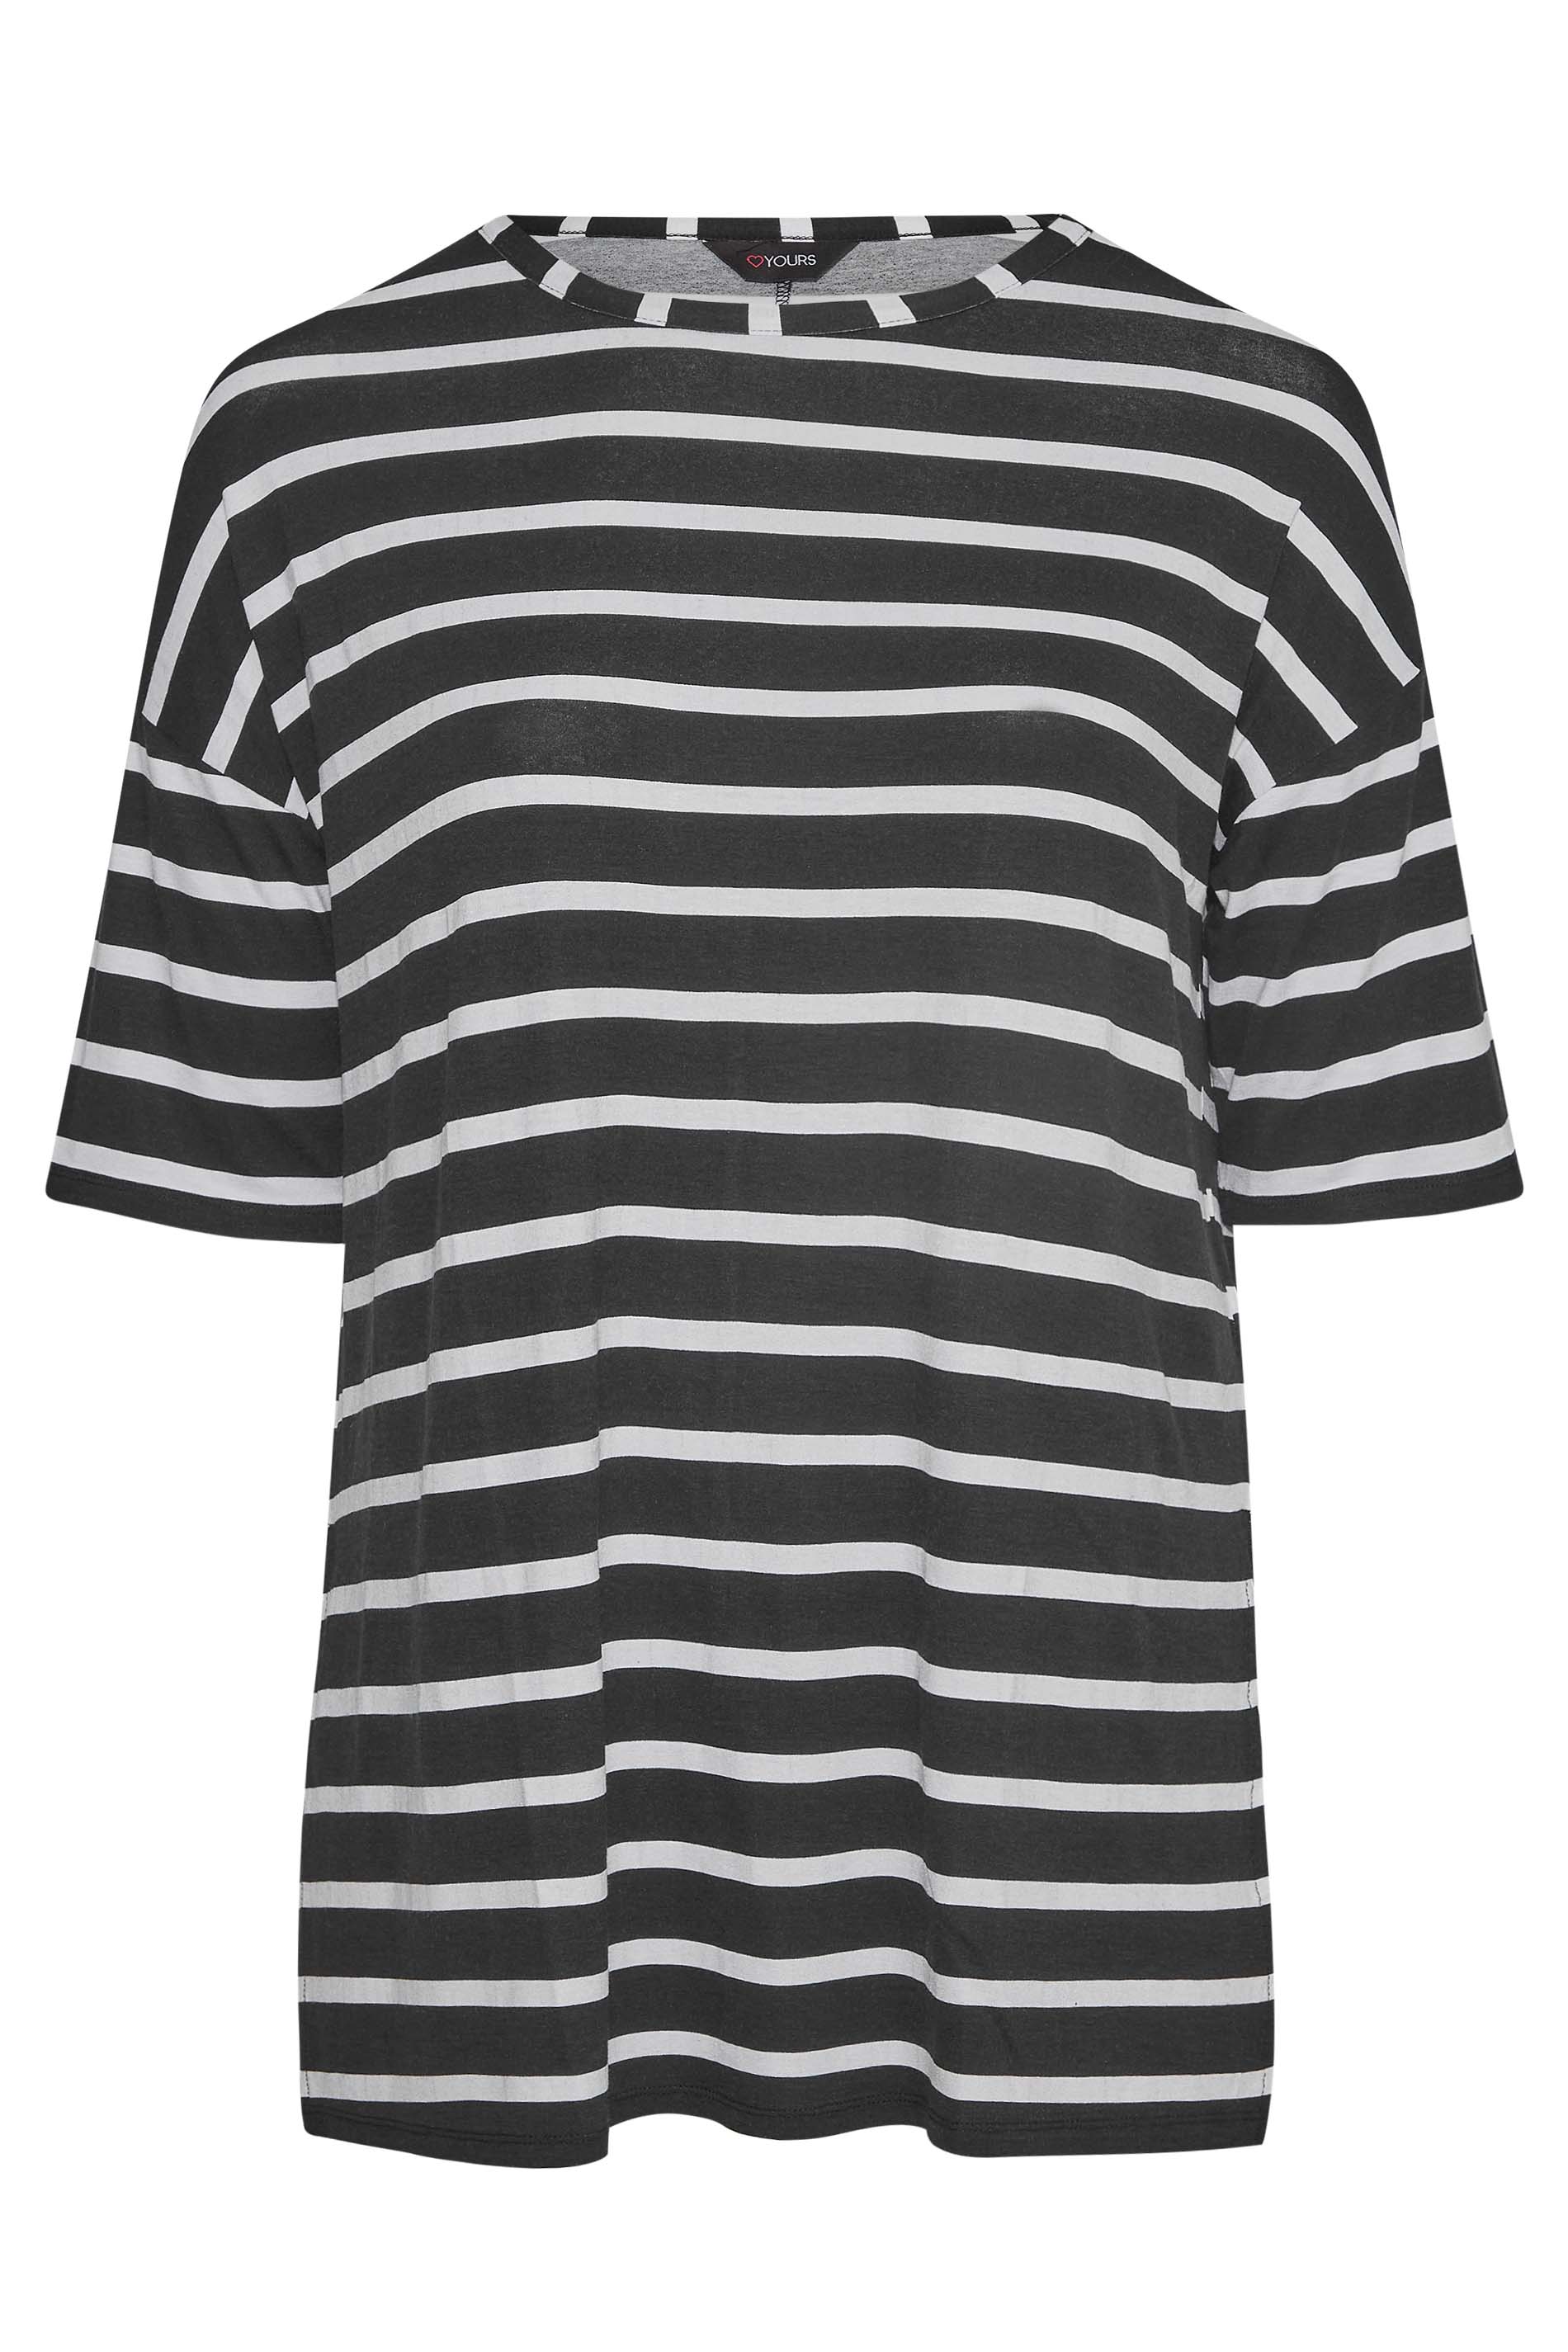 Grande taille  Tops Grande taille  T-Shirts | T-Shirt Noir à Rayures Design Oversize - II74559